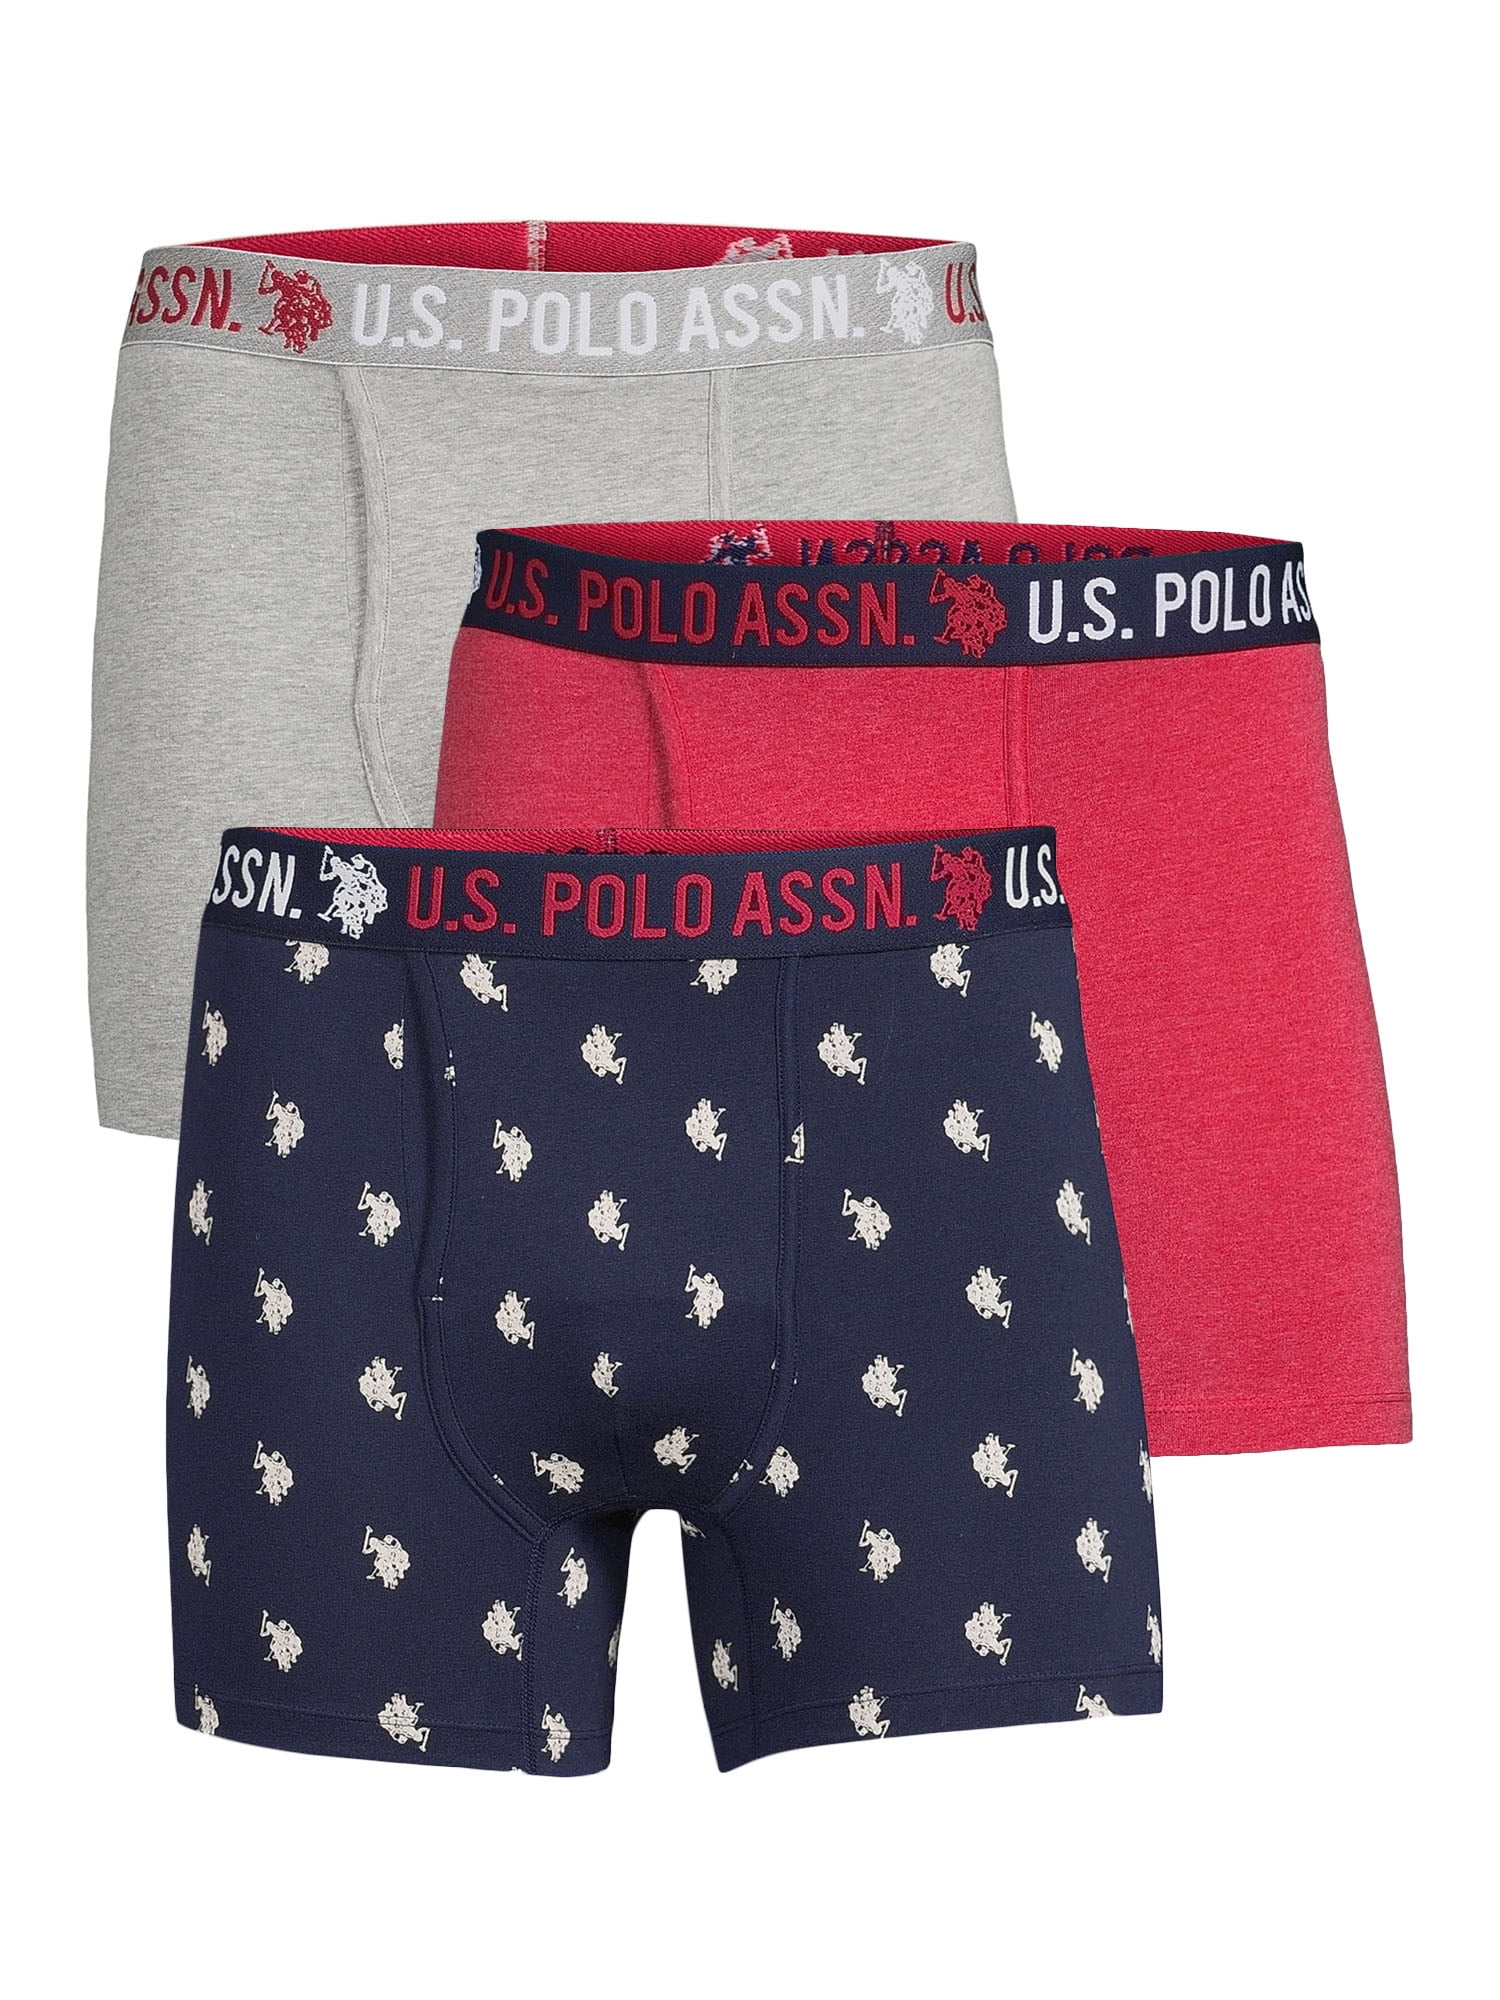 U.S. Polo Assn. Men's Cotton Stretch Mid Leg Boxer Briefs Underwear, 4.5  Inch, 3 Pack - Walmart.com